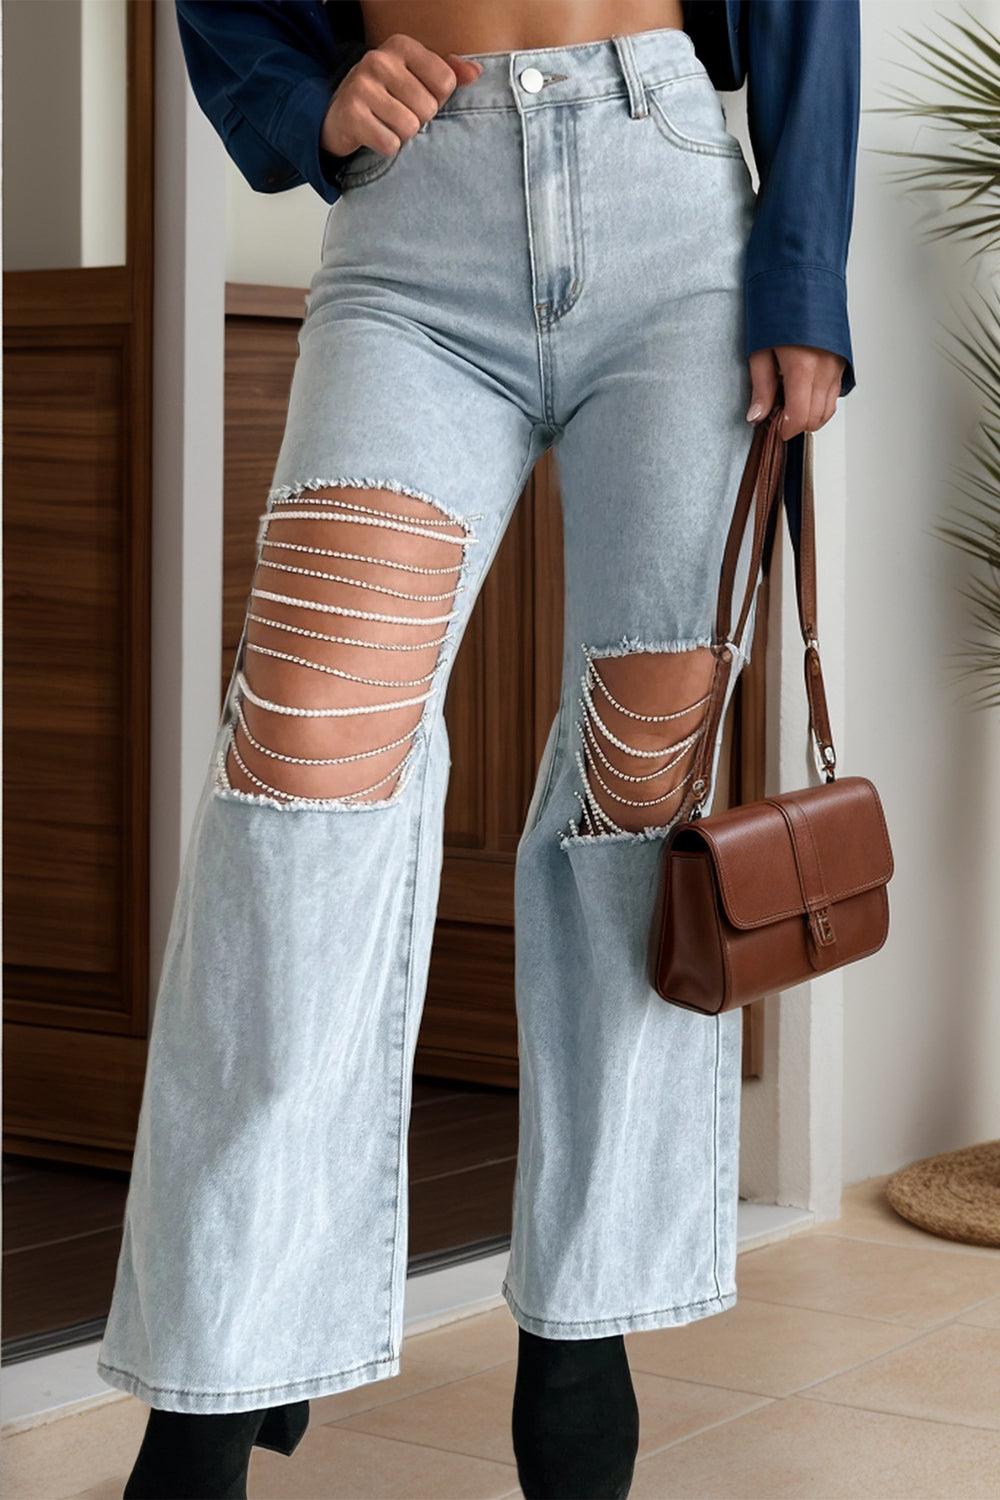 Bona Fide Fashion - Distressed Bead Chain Straight Jeans - Women Fashion - Bona Fide Fashion